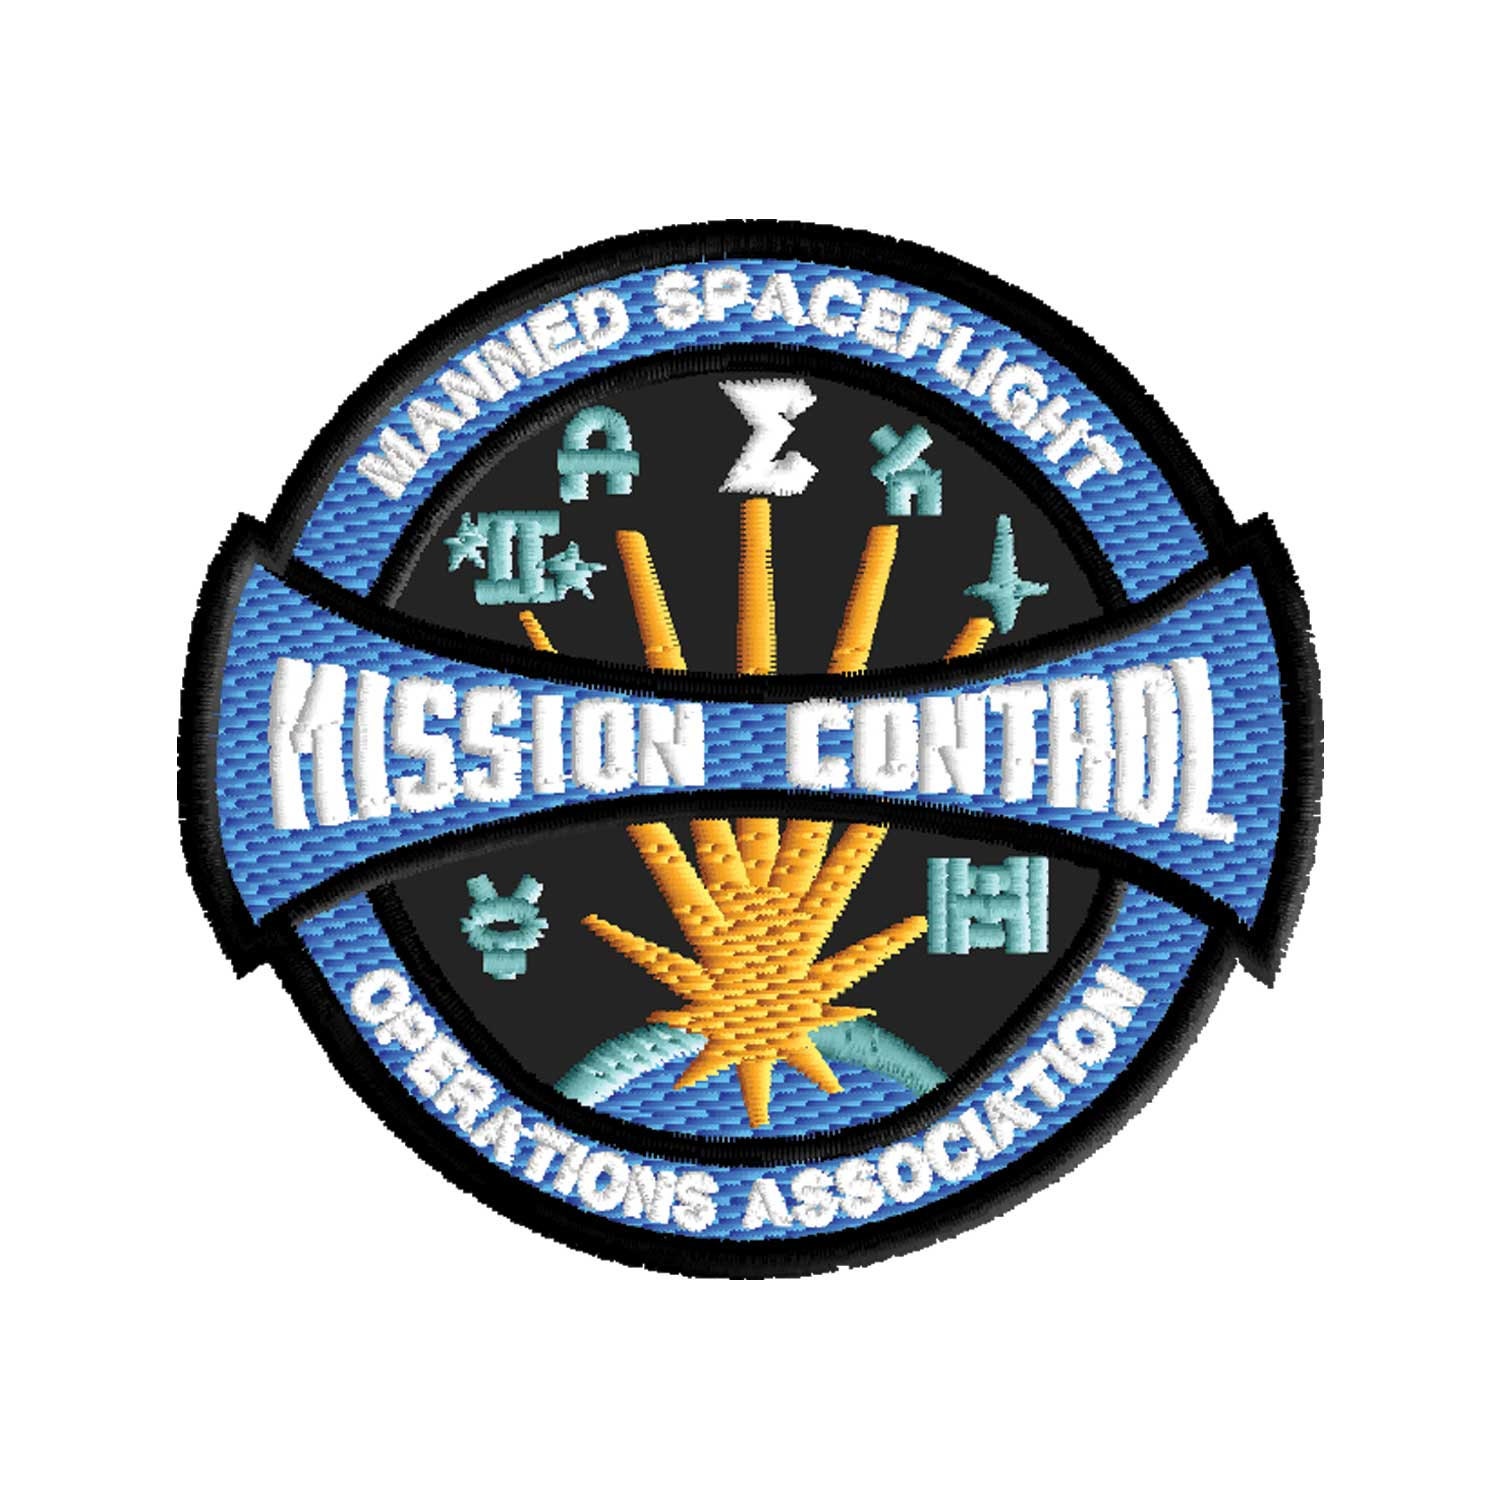 Stickers NASA – Cipsela Corp